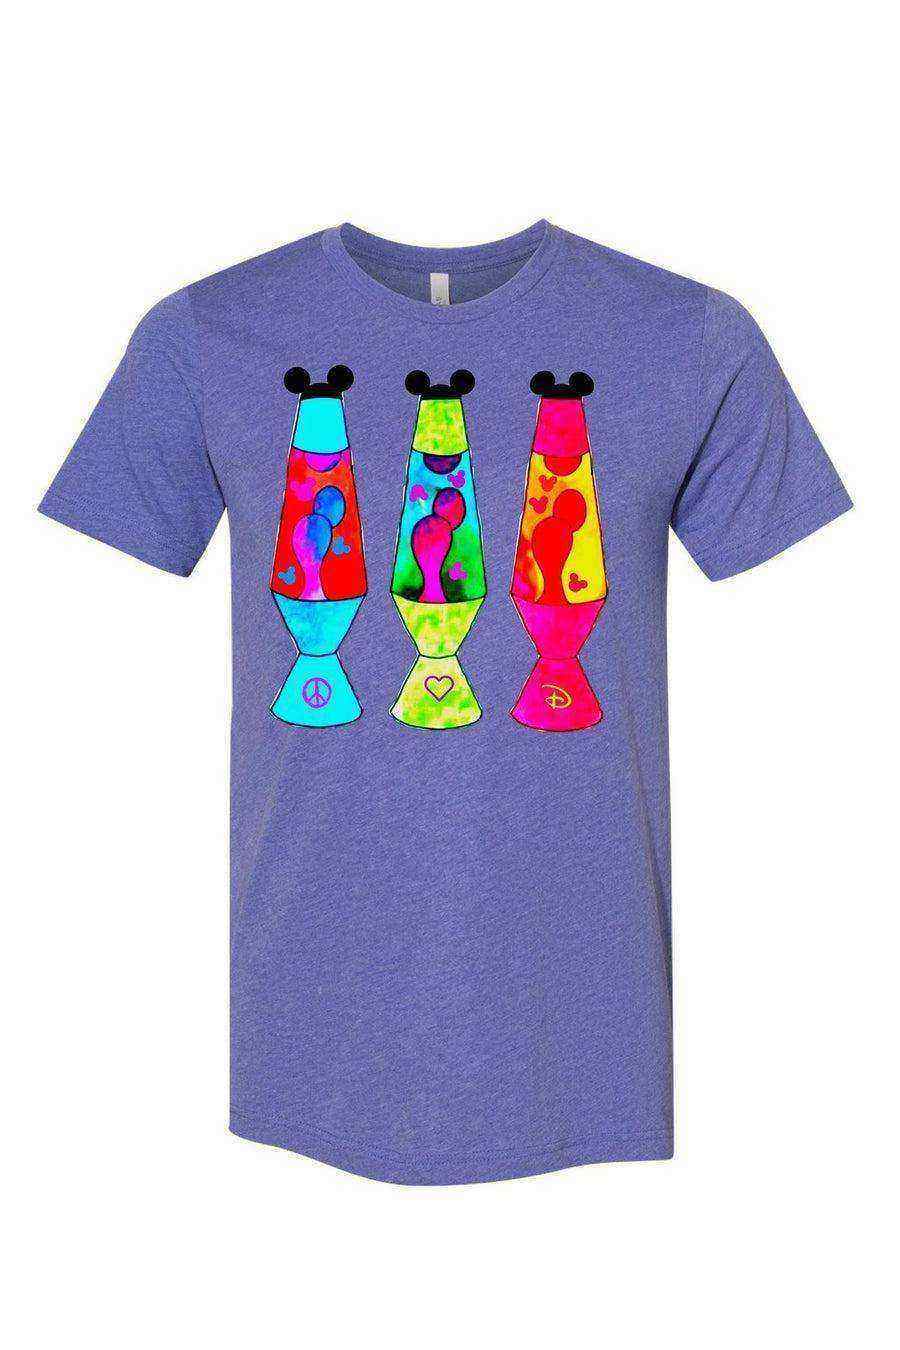 Mickey Shaped Lava Lamp Shirt | Peace Love & Shirt - Dylan's Tees